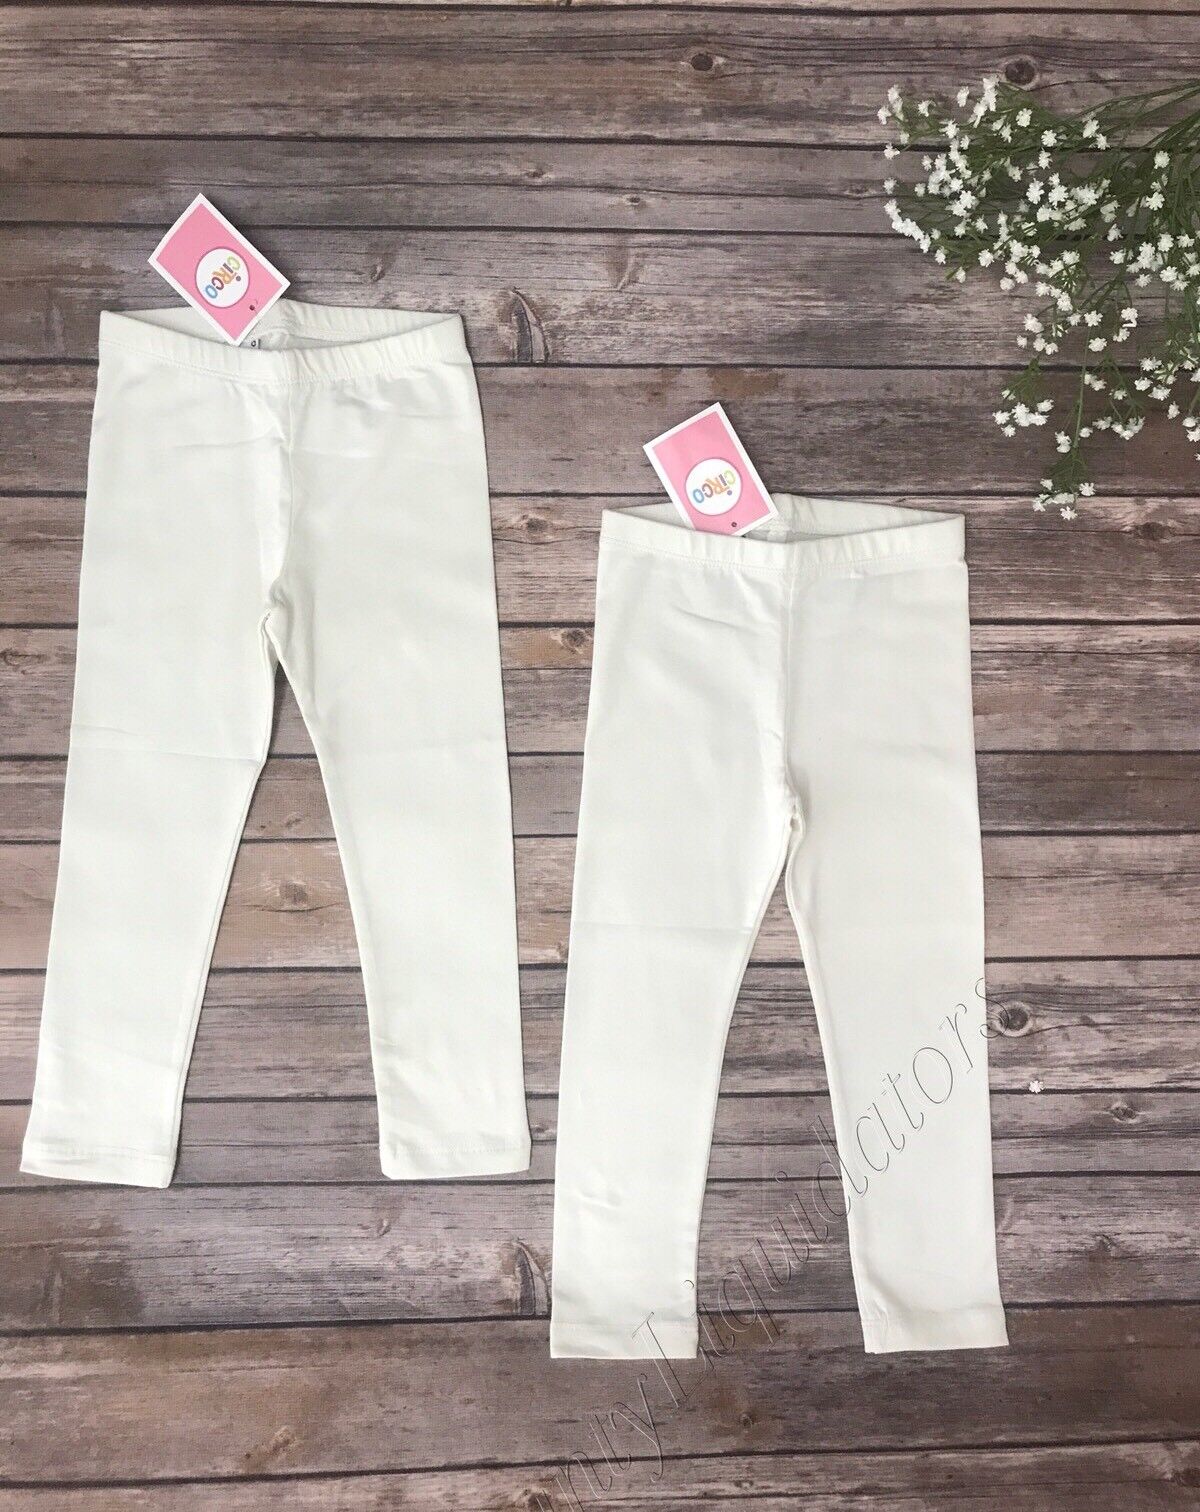 Set of 2 Circo leggings Almond Cream off white bottoms New Size 3T Girls Kids  Circo